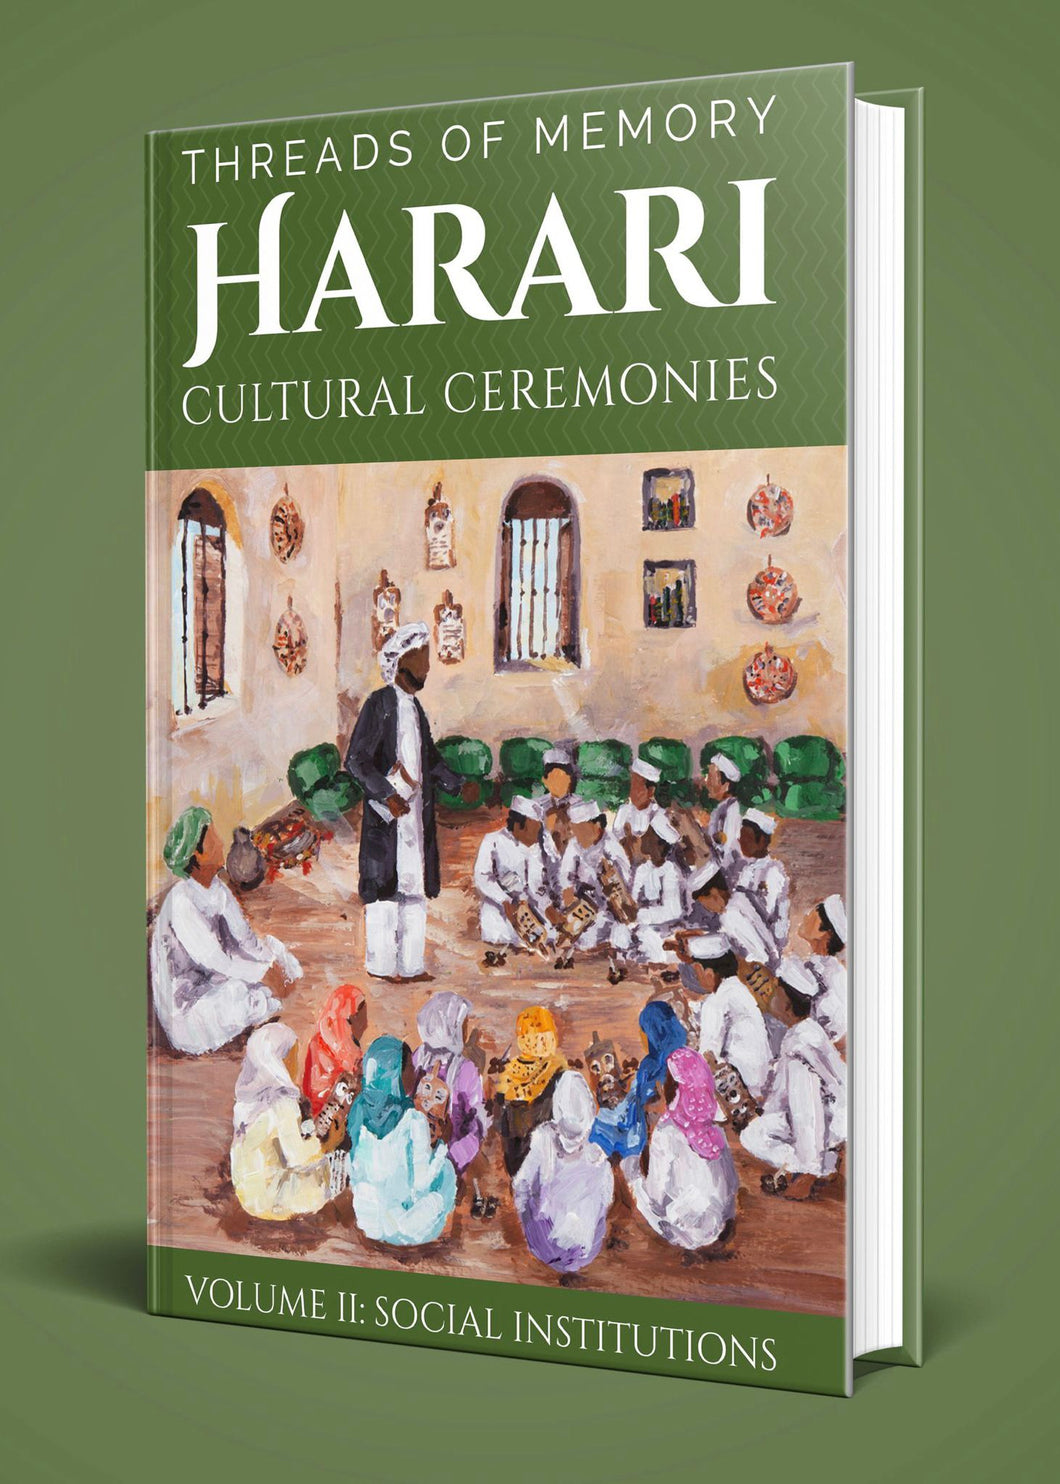 PRINT - Volume II: Harari Cultural Ceremonies - Social Institutions